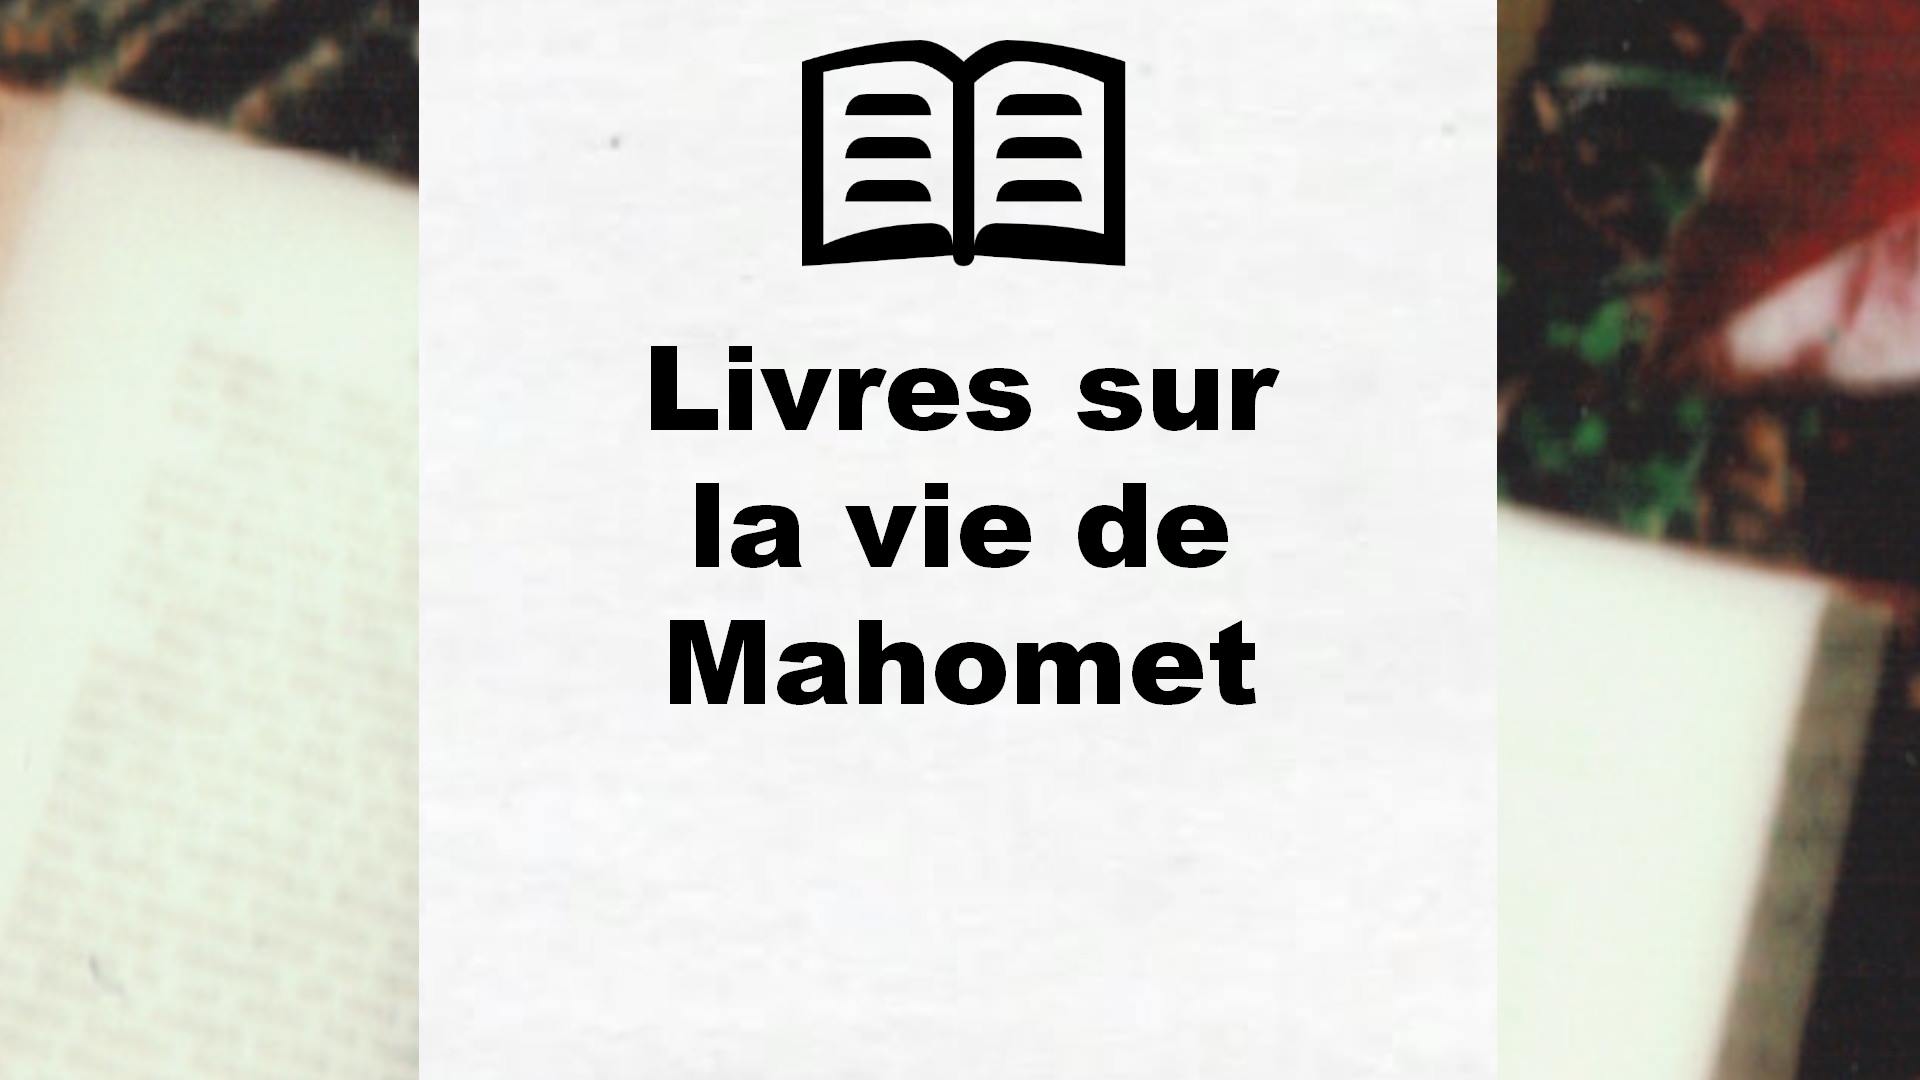 Livres sur la vie de Mahomet